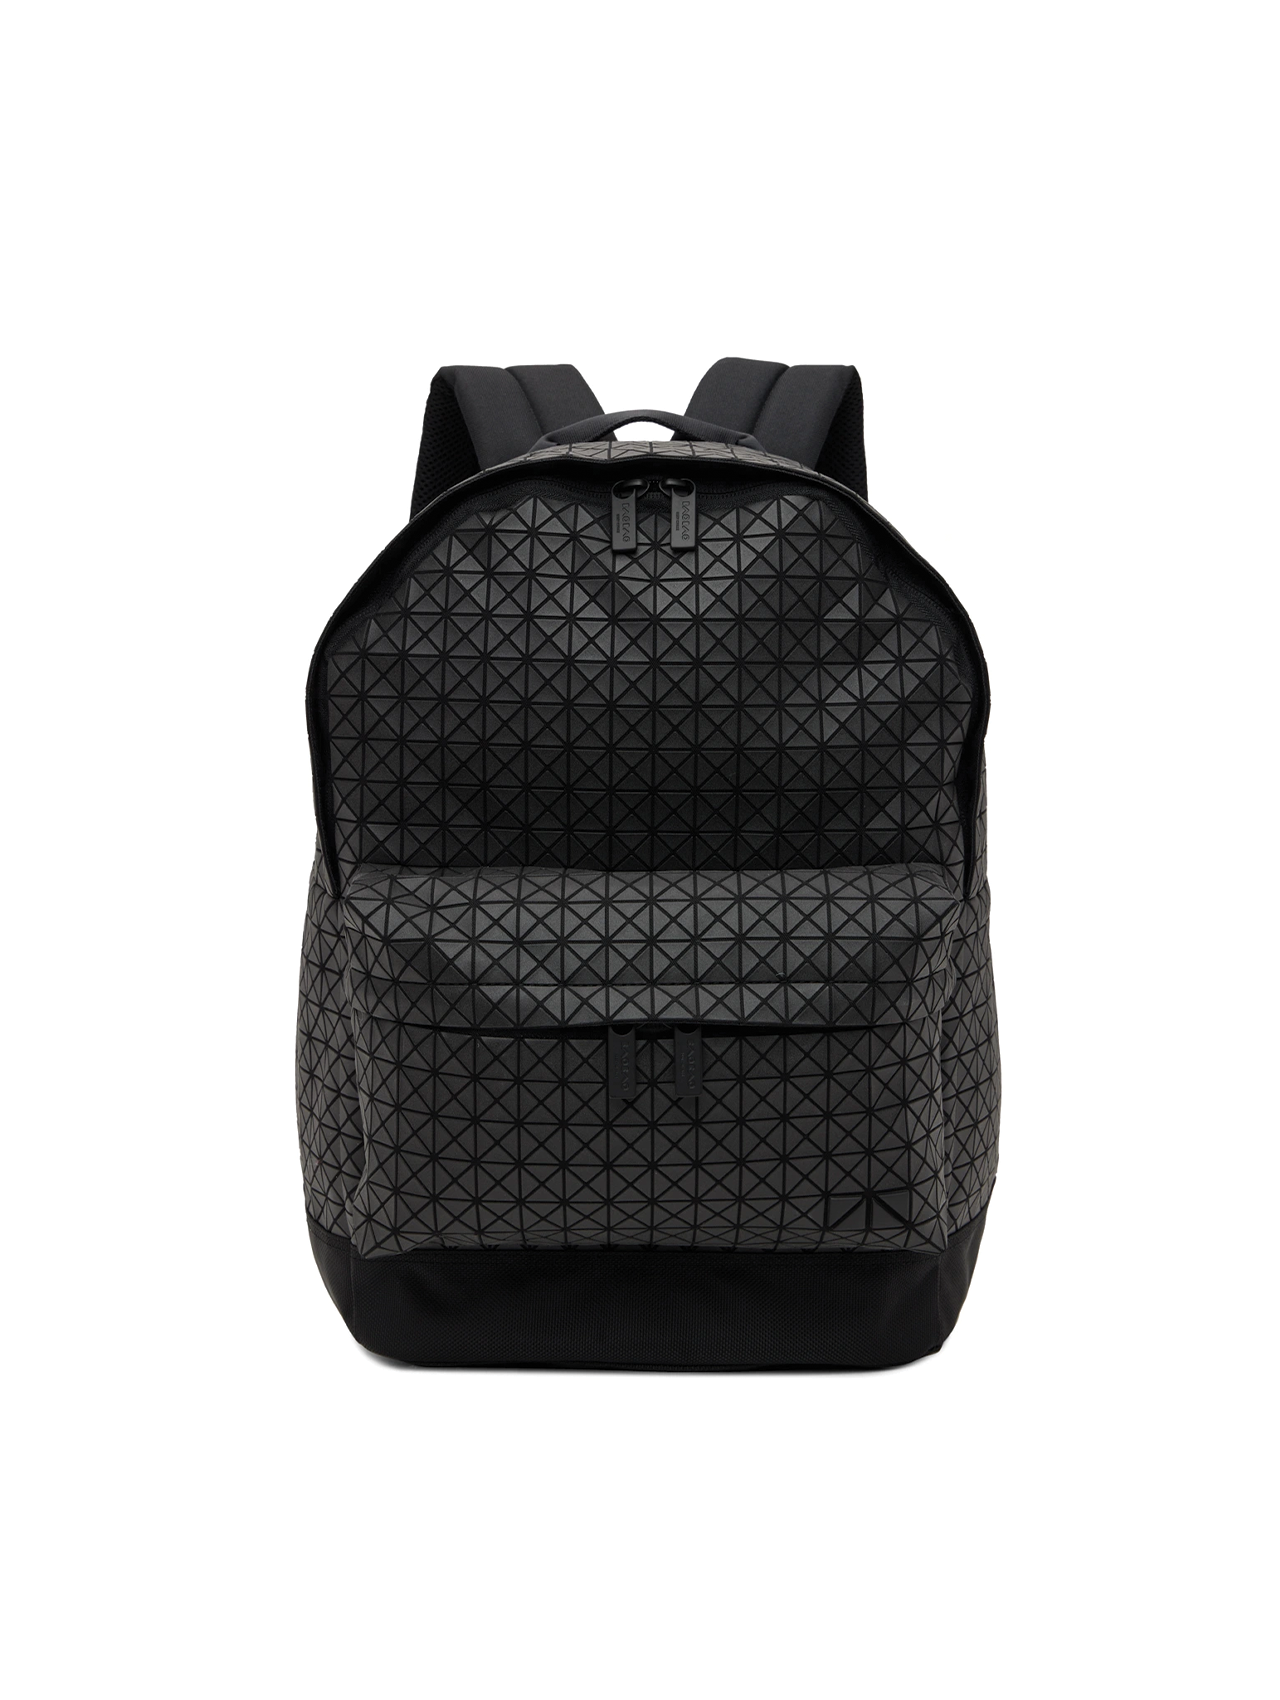 Bao Bao Issey Miyake Matte Black Cart Backpack